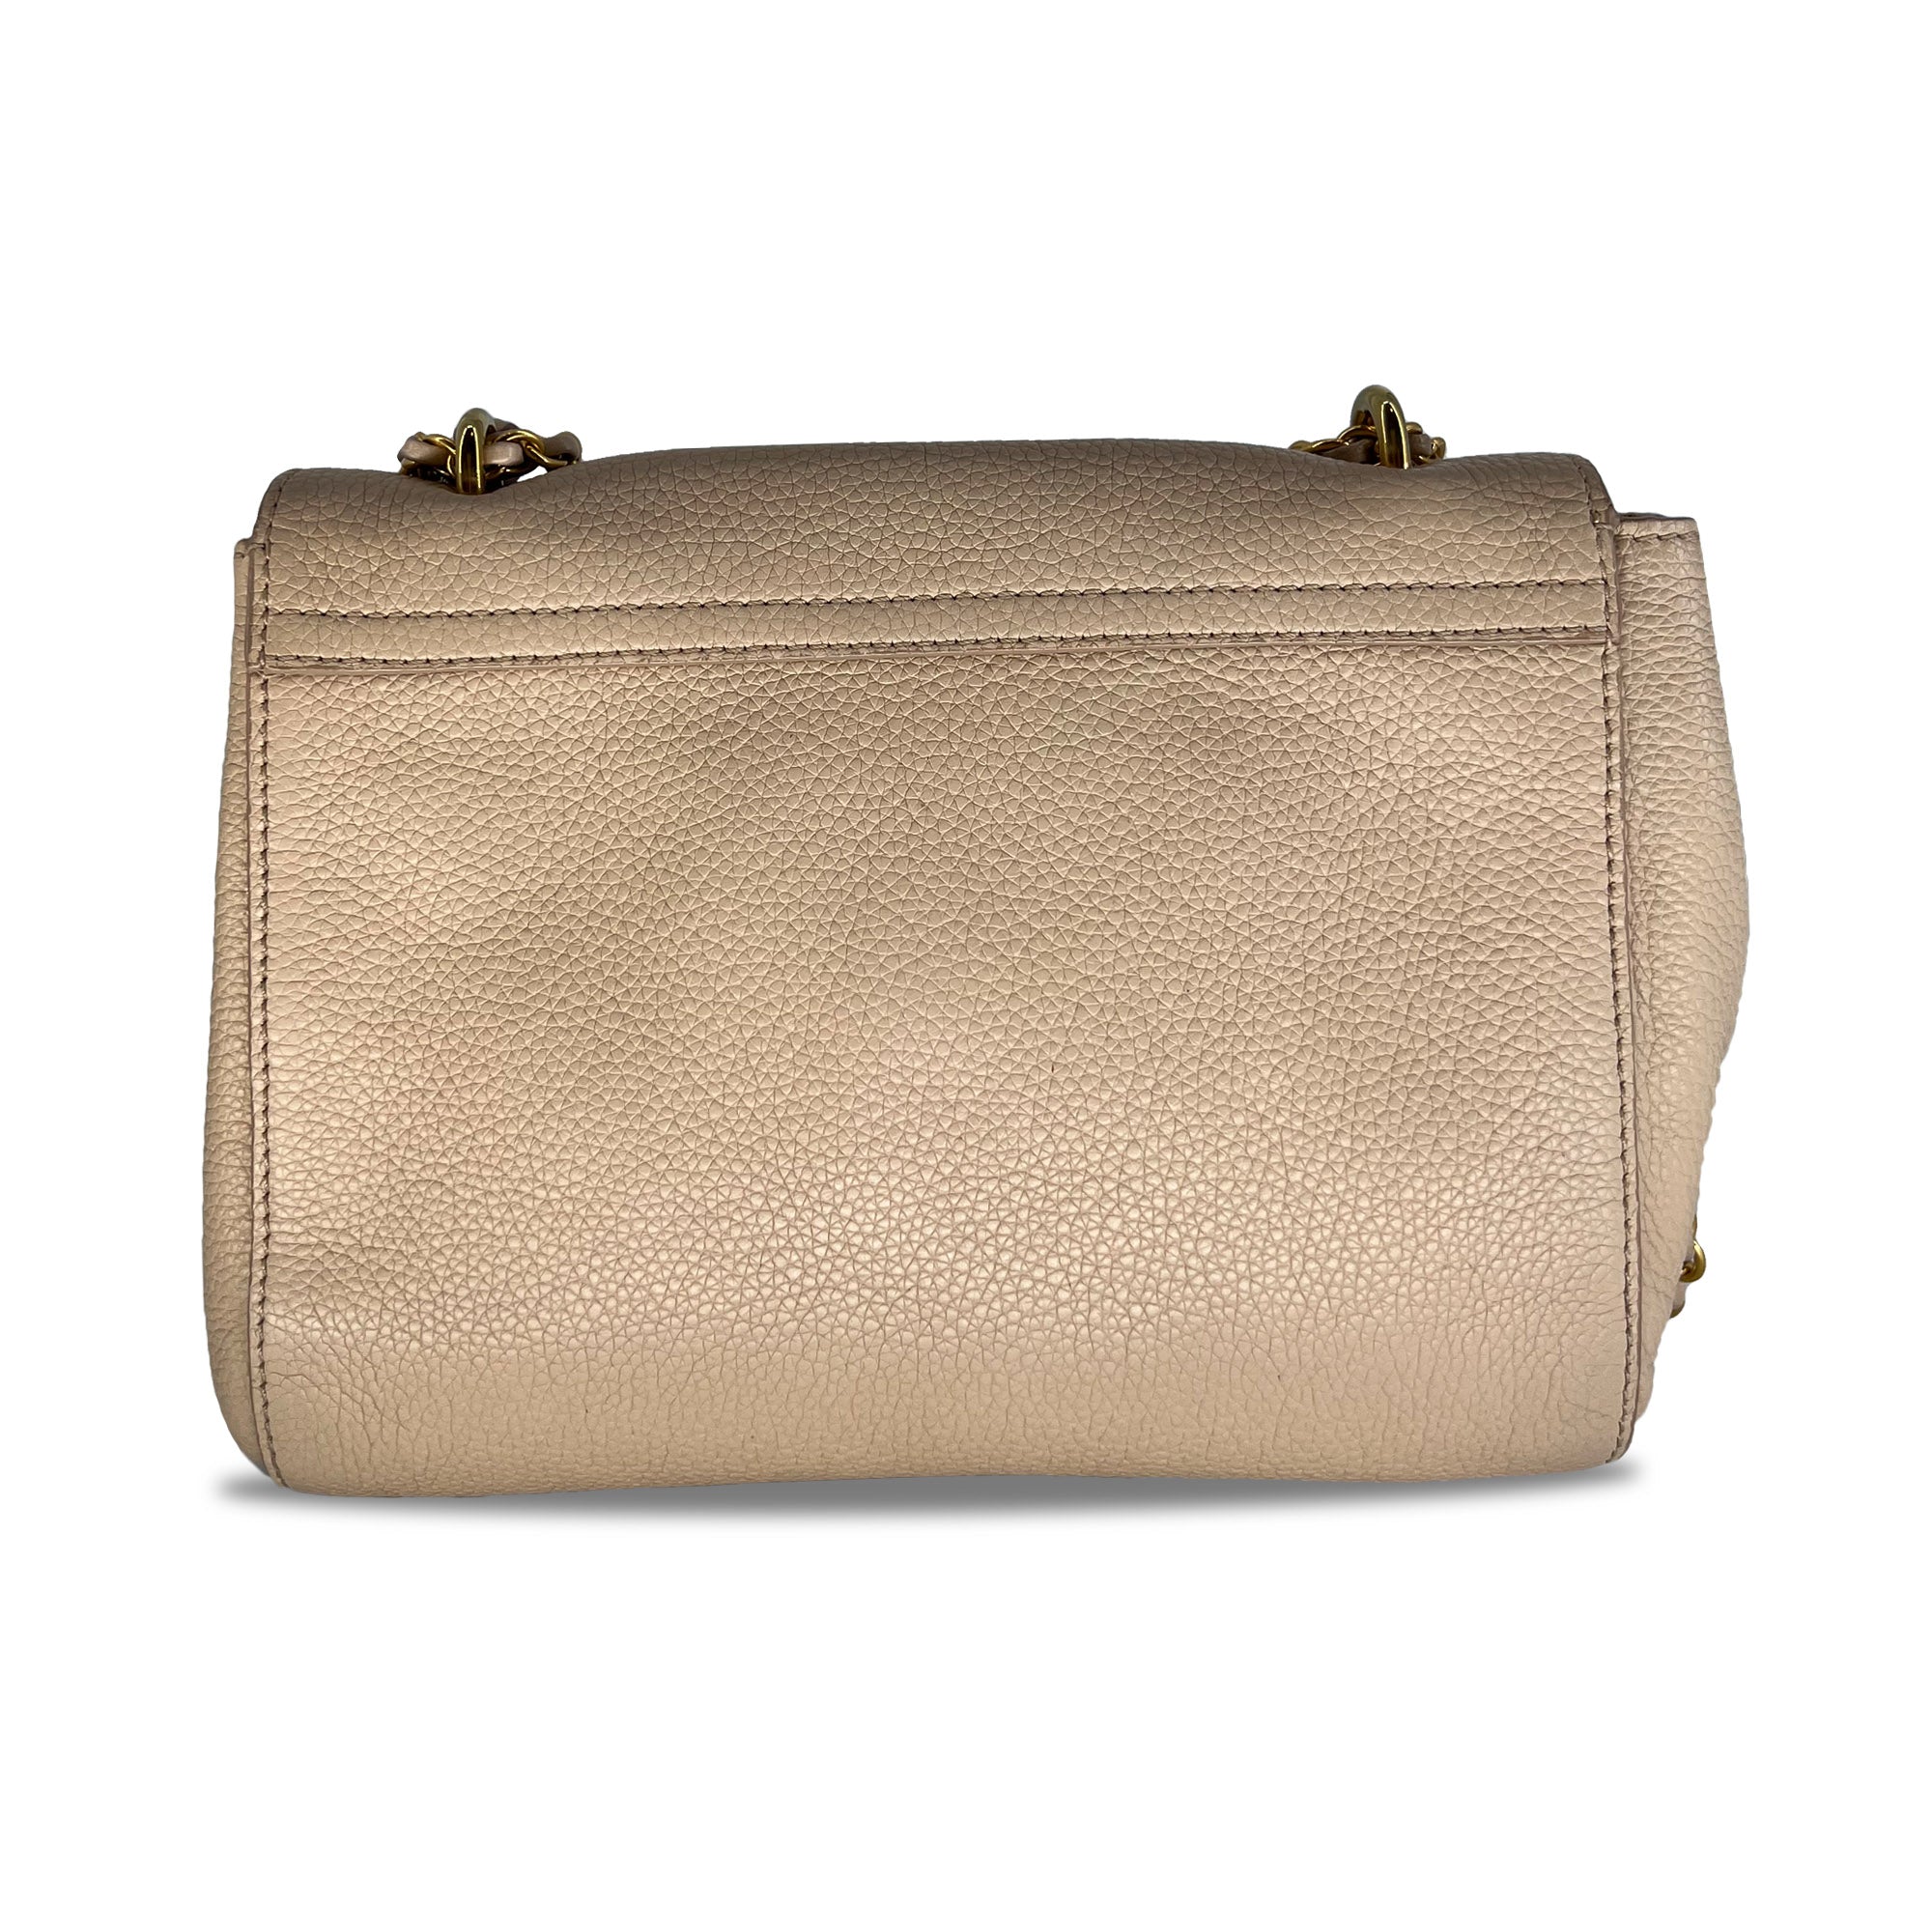 Mulberry “Lily” Small Handbag